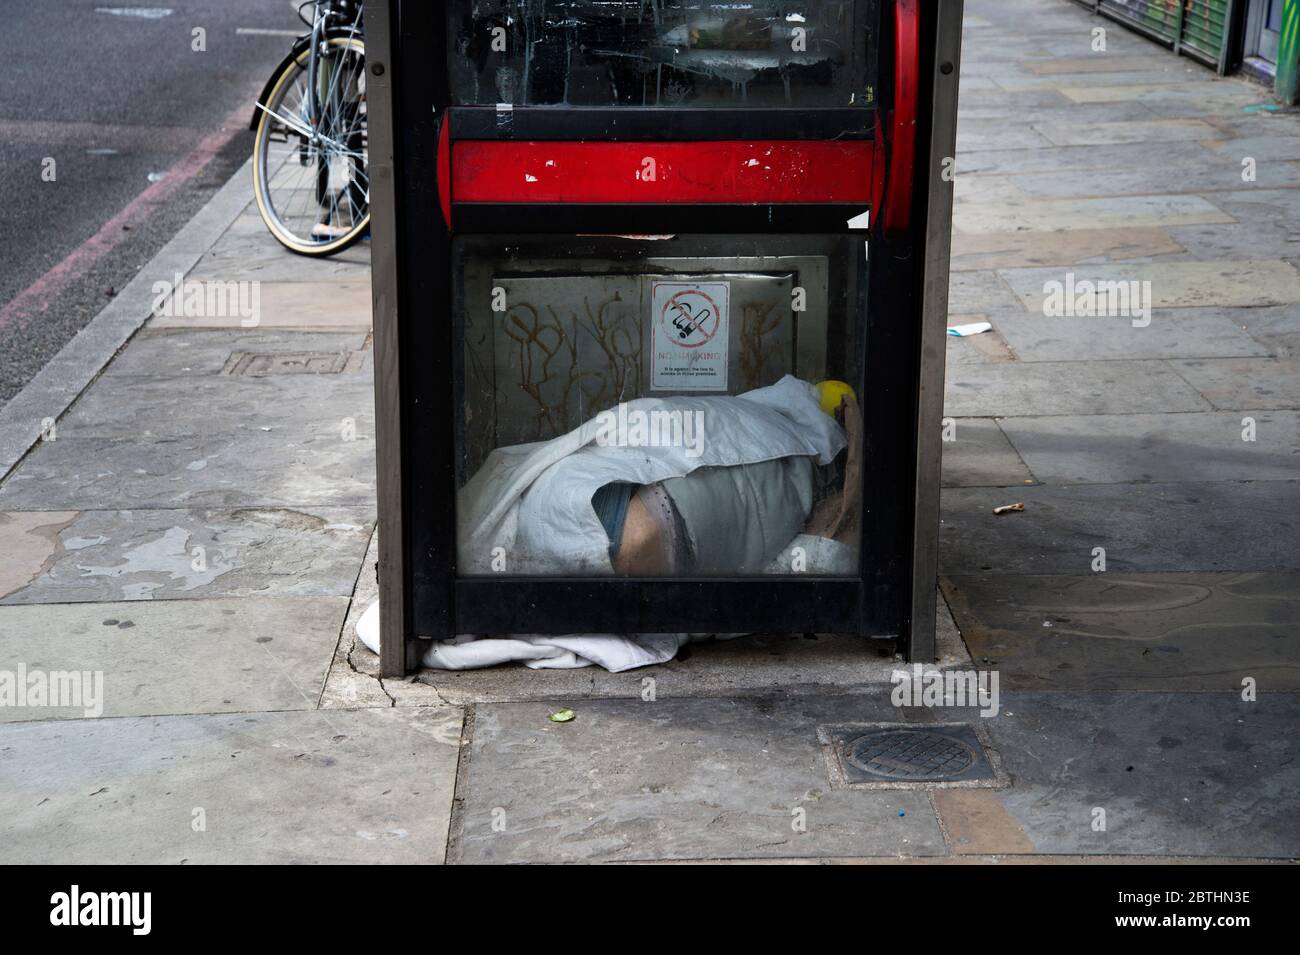 London Mai 2020 die Covid-19-Pandemie. Kingsland Road, Hackney. Obdachlose Person, die in einer Telefonbox schläft. Stockfoto